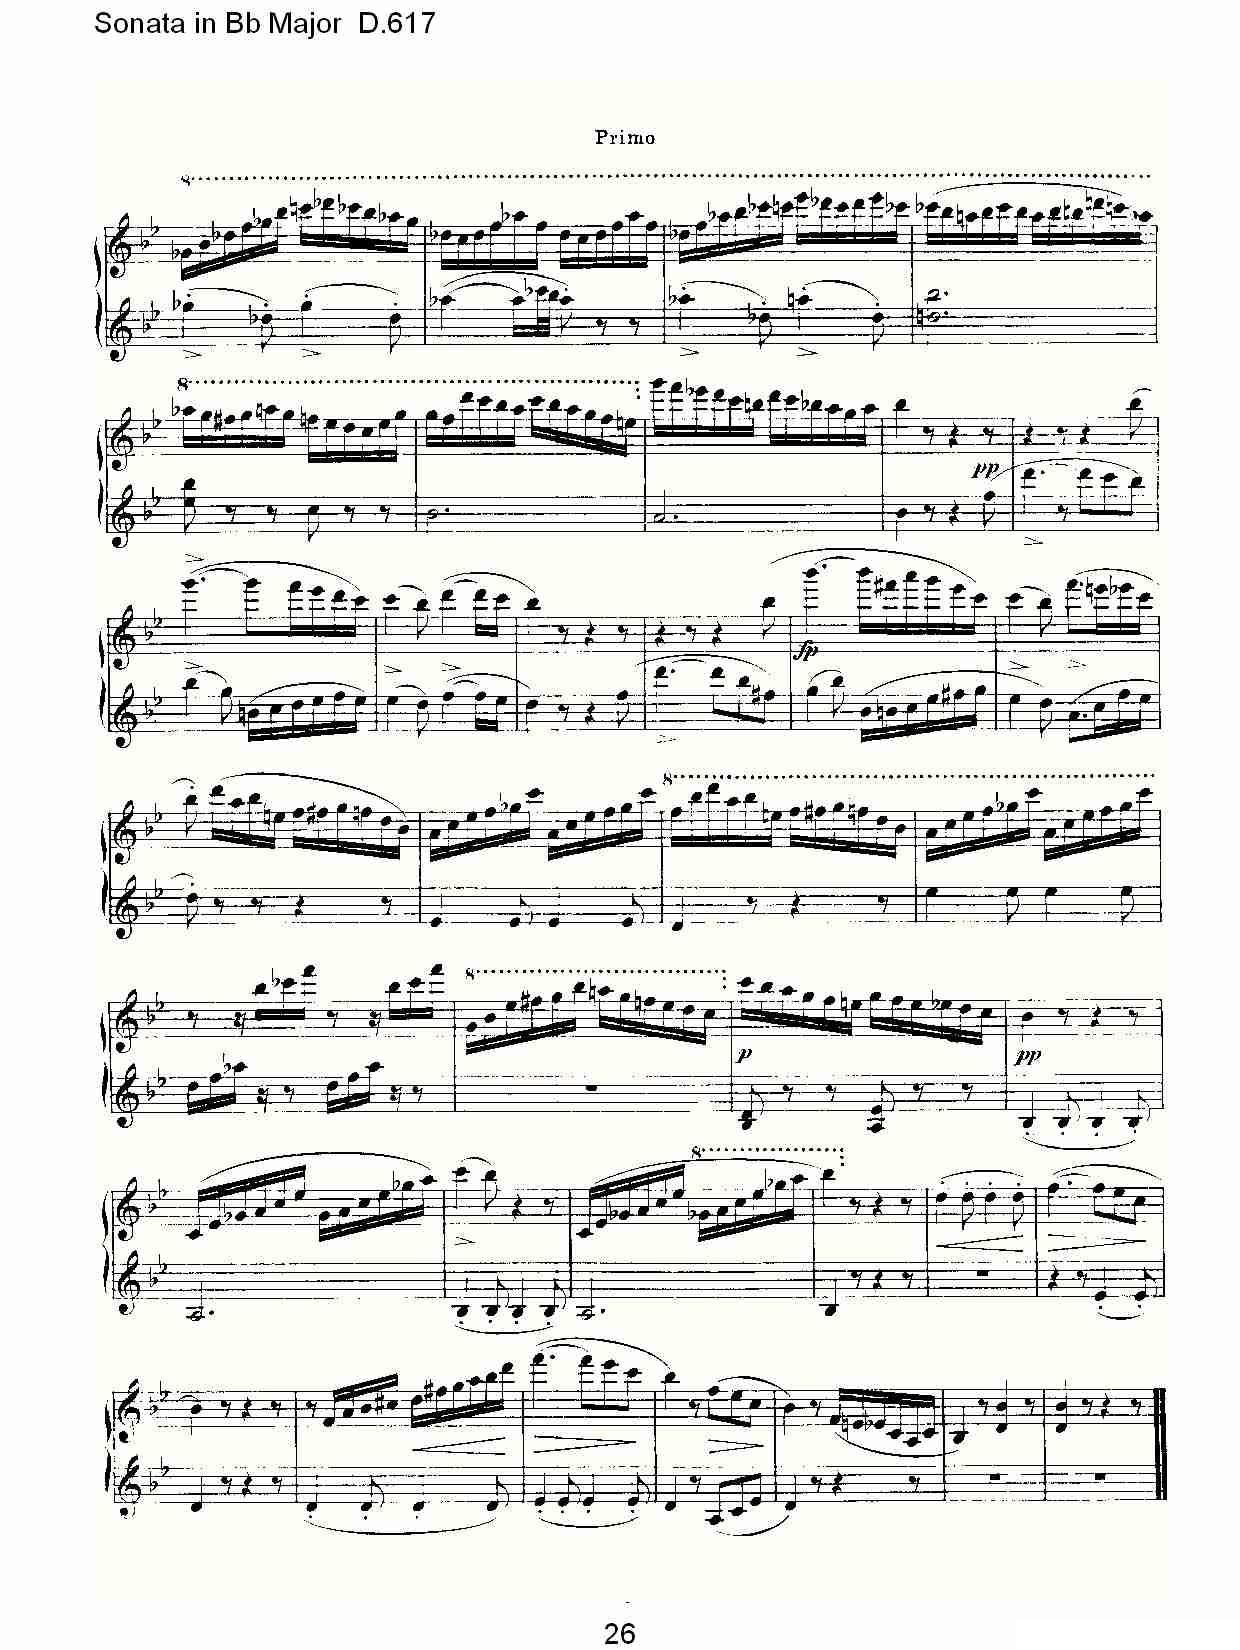 Sonata in Bb Major D.617（Bb大调奏鸣曲 D.617）钢琴曲谱（图26）